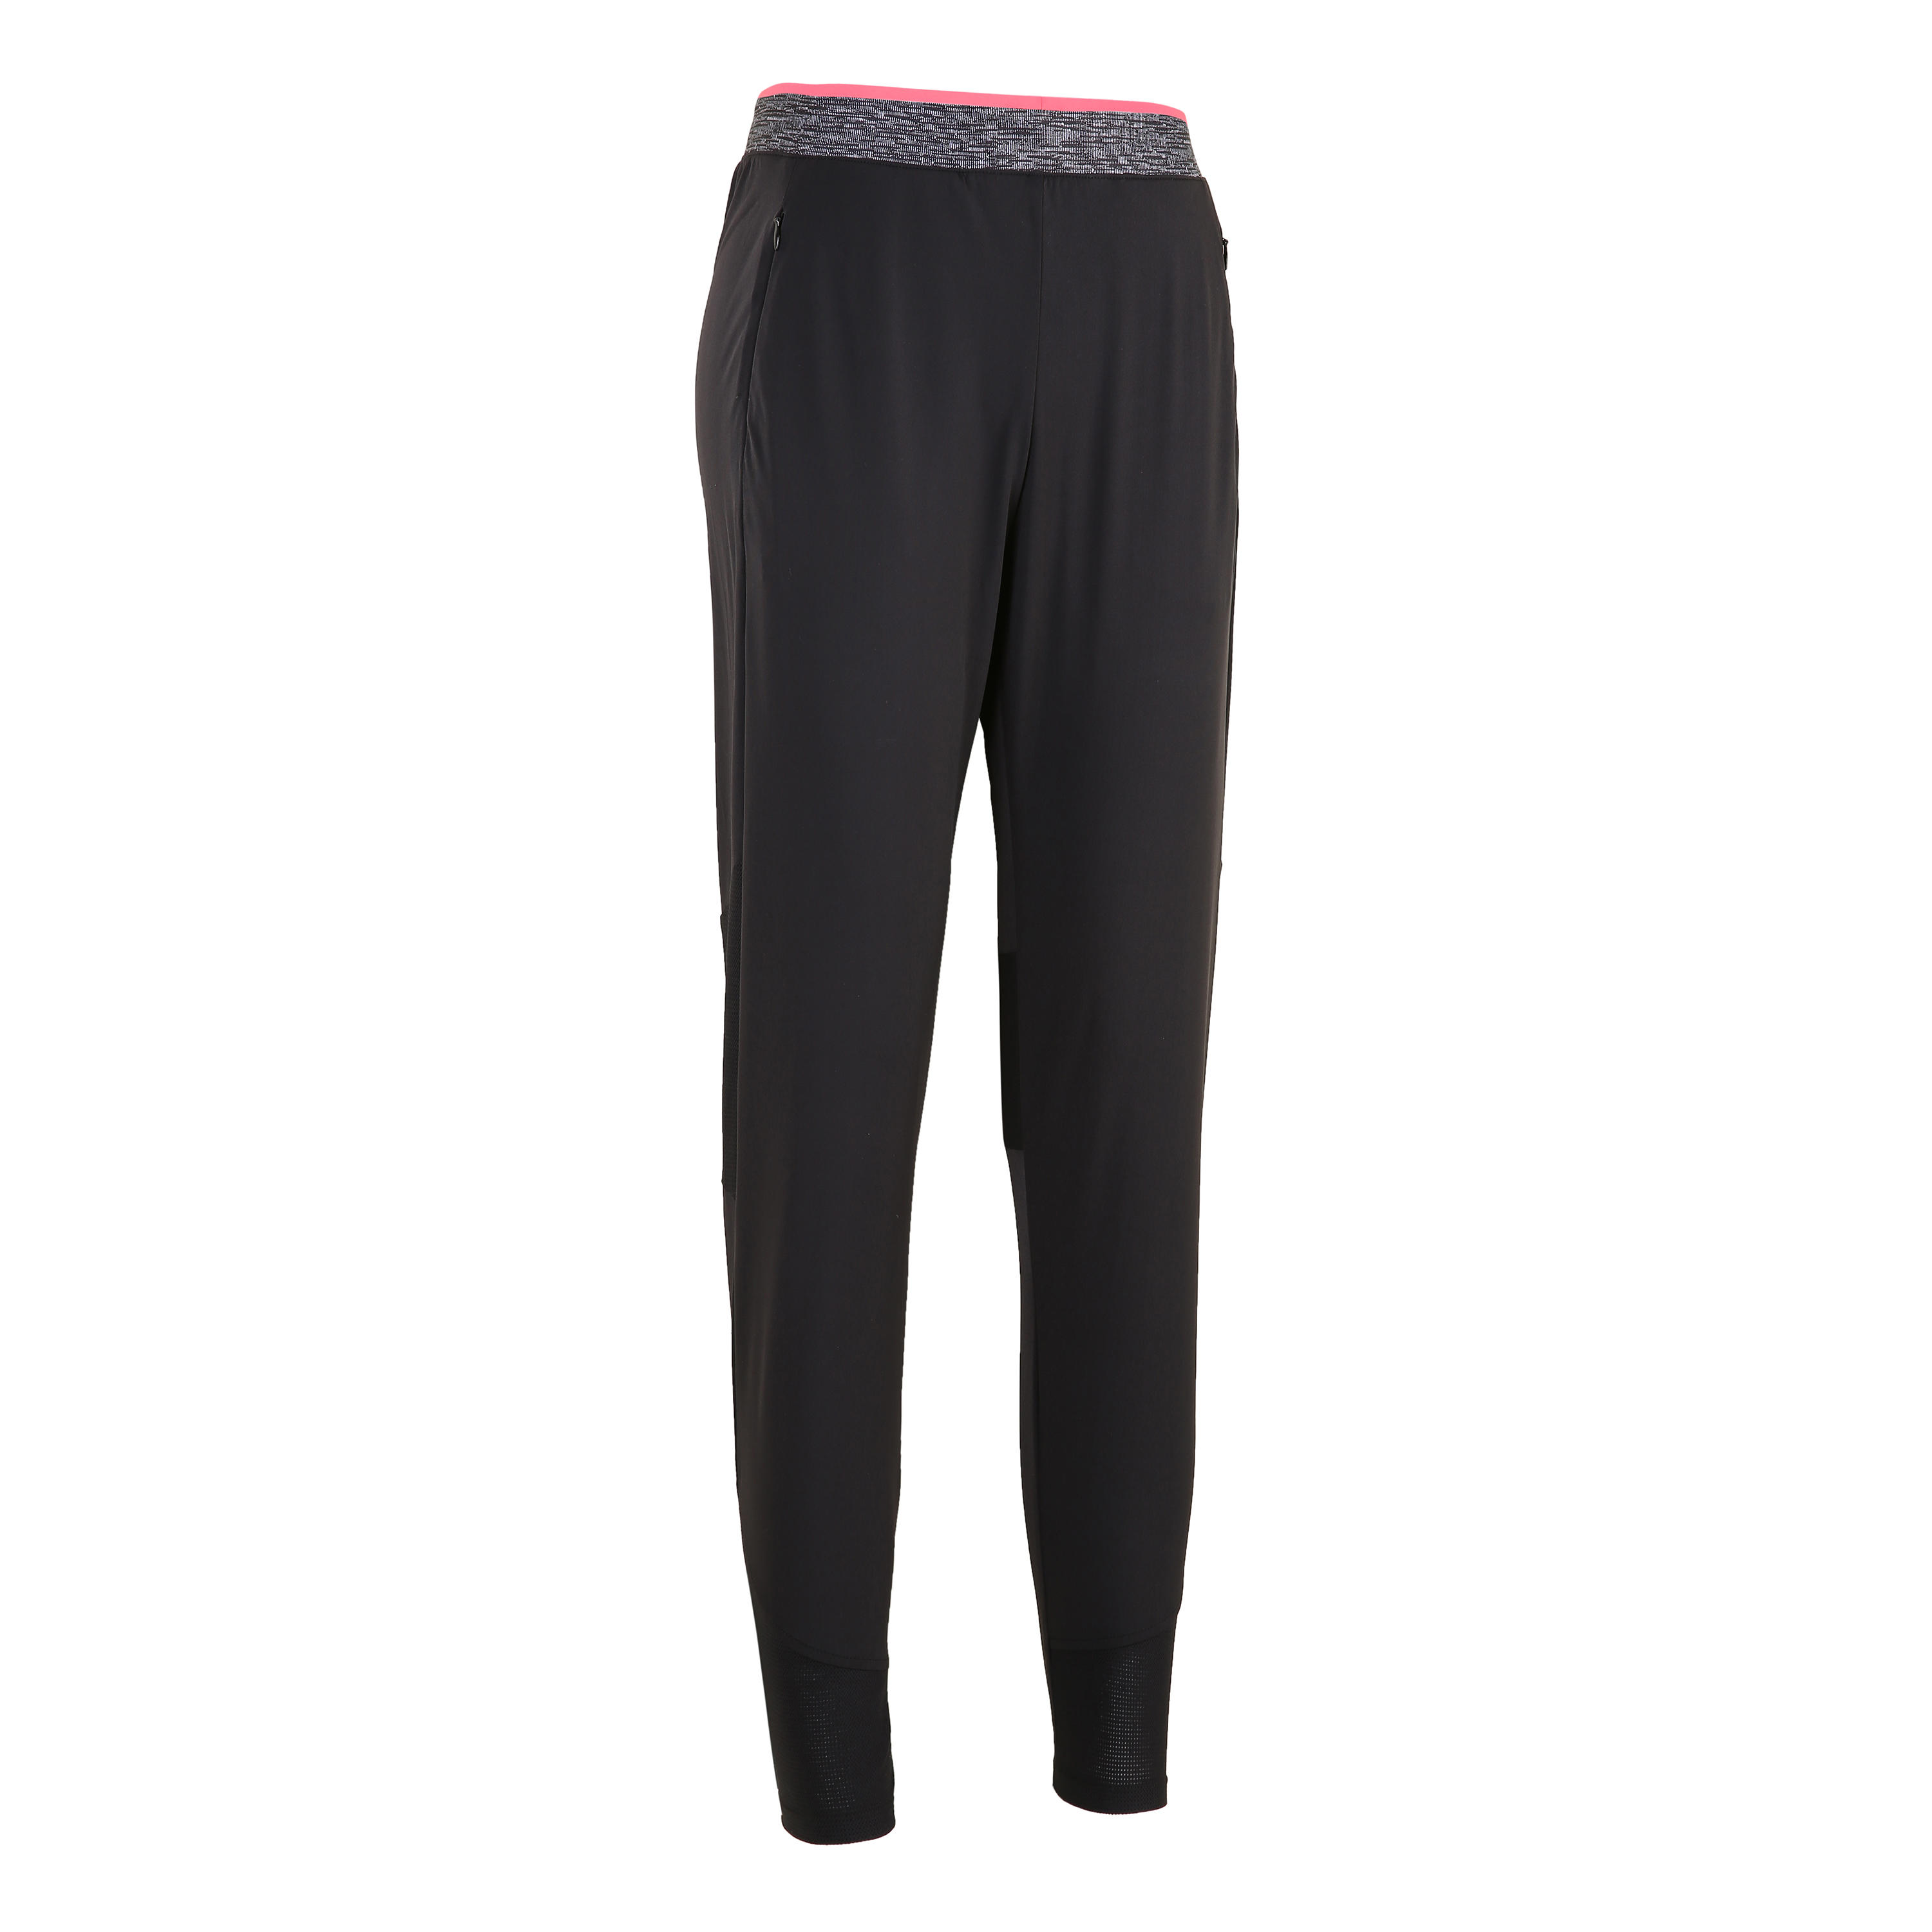 Buy Running Track Pants Black Online | Decathlon